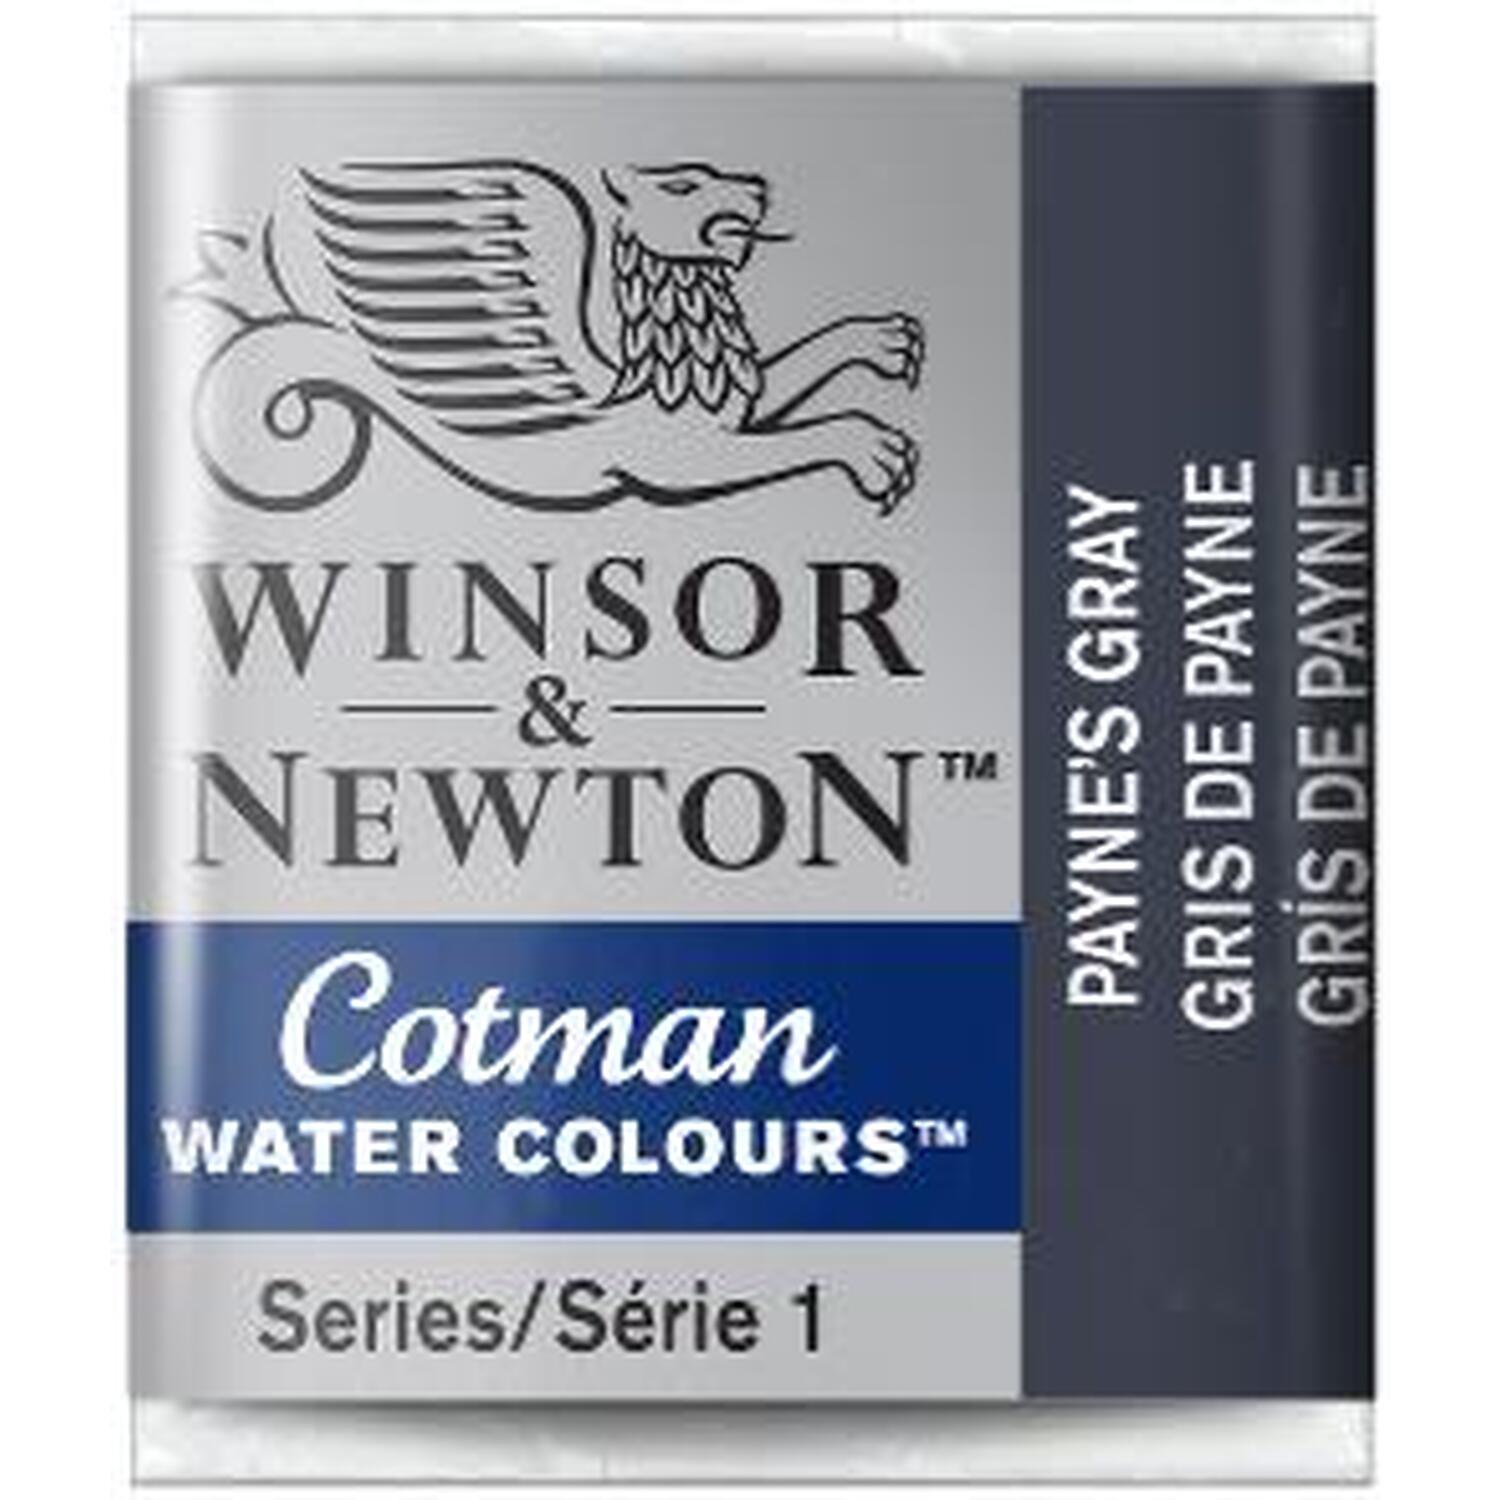 Winsor and Newton Cotman Watercolour Half Pan Paint - Payne's Gray Image